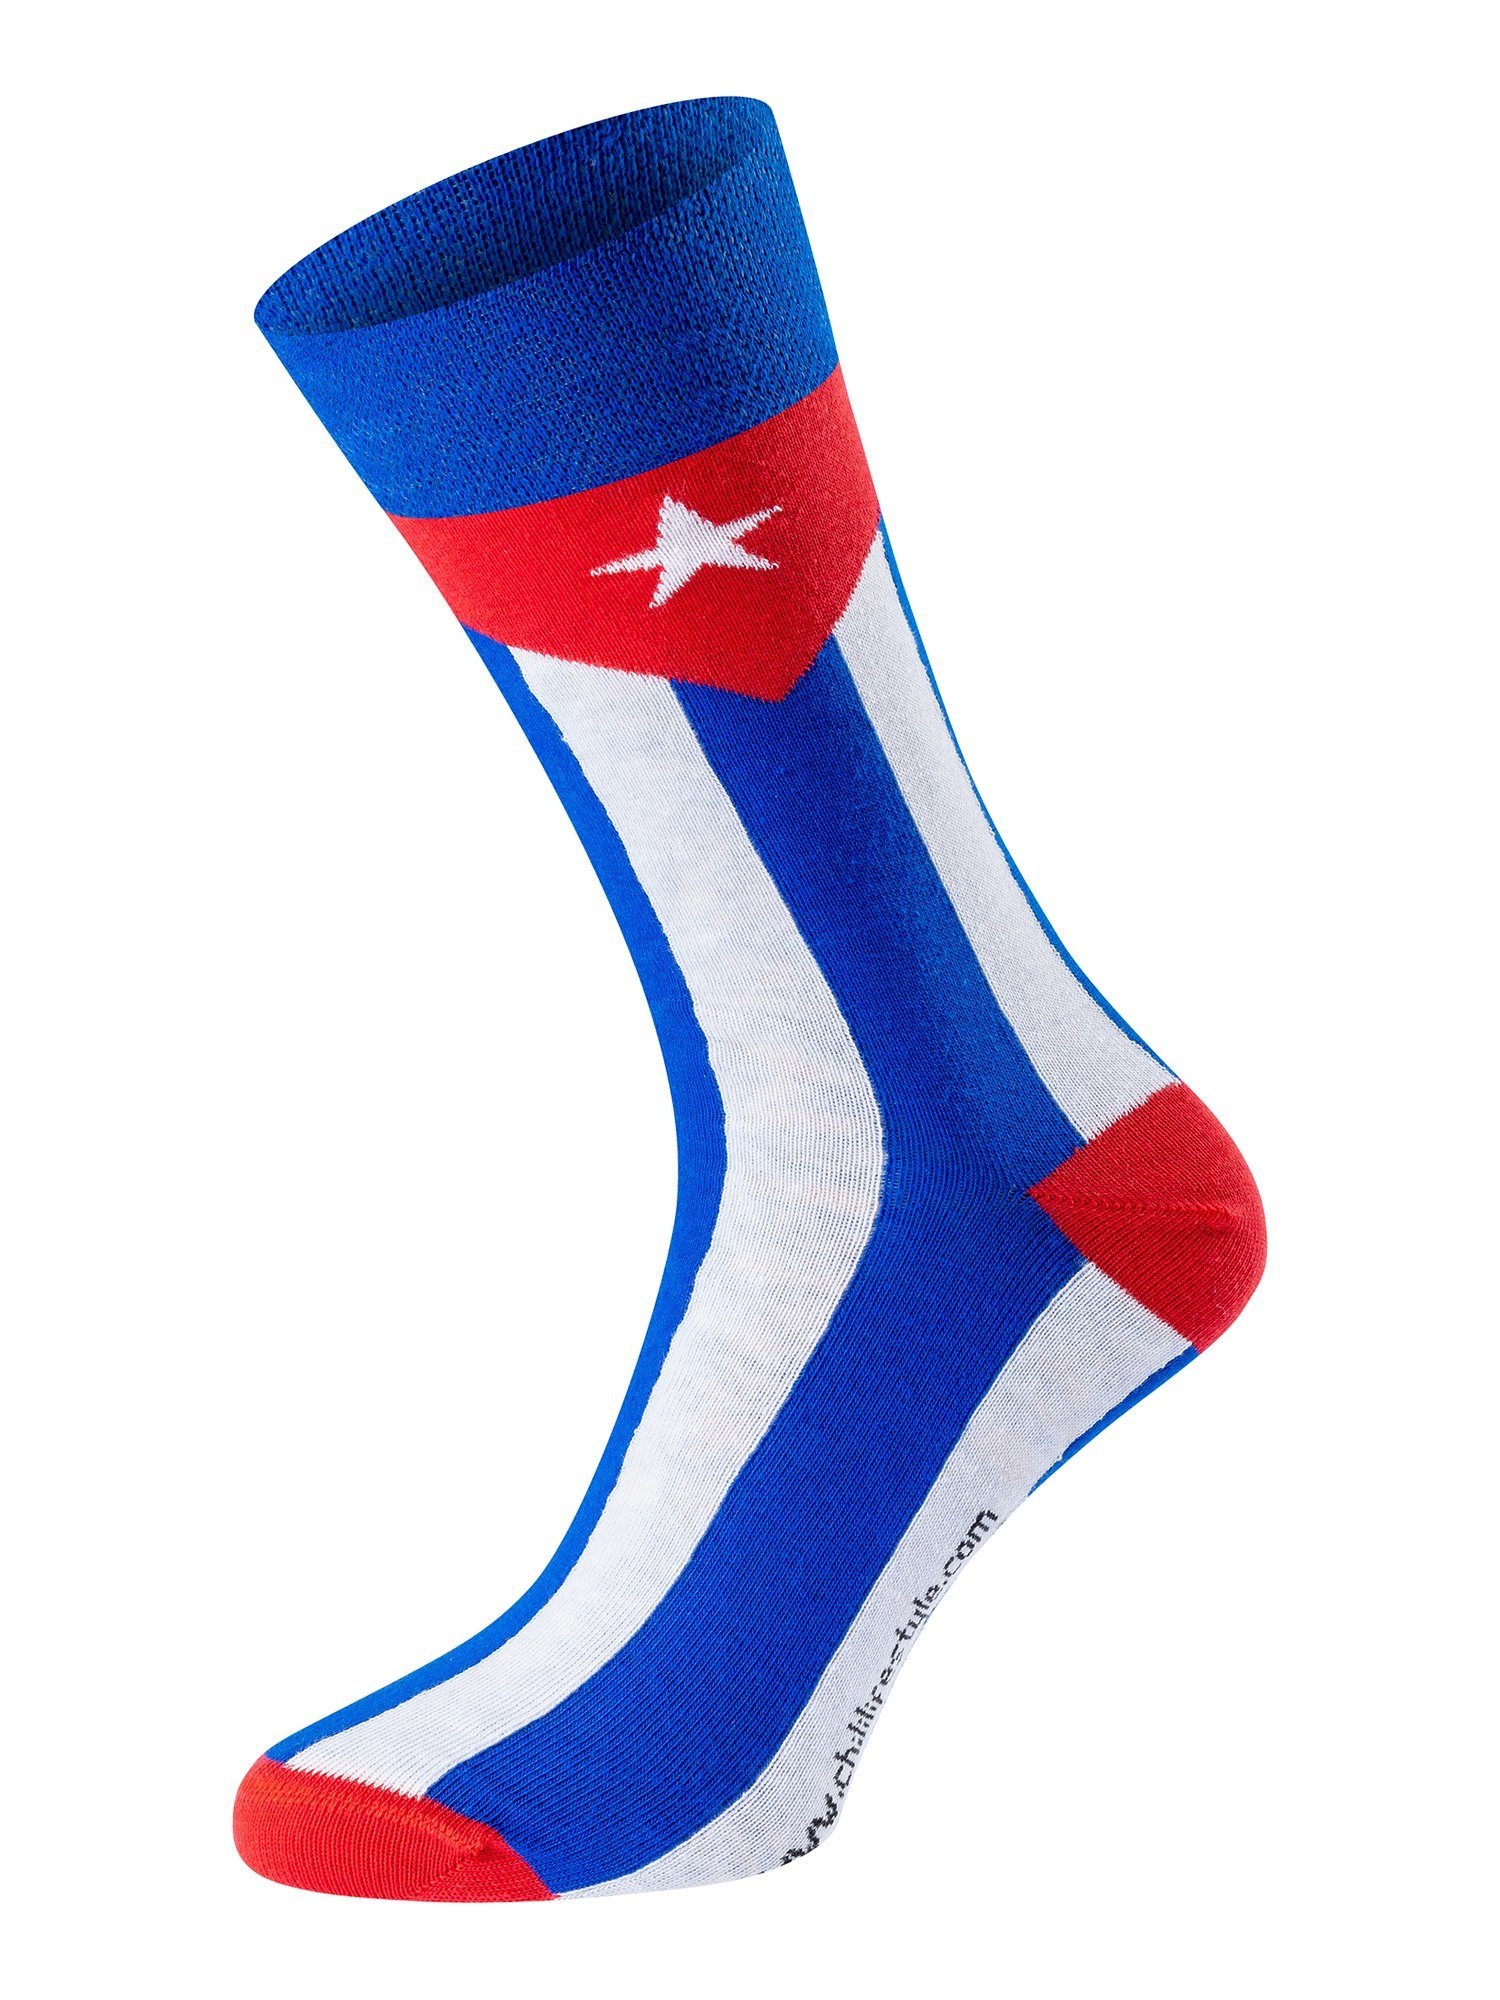 Chili Lifestyle Freizeitsocken Banderole Socks Fidel Leisure